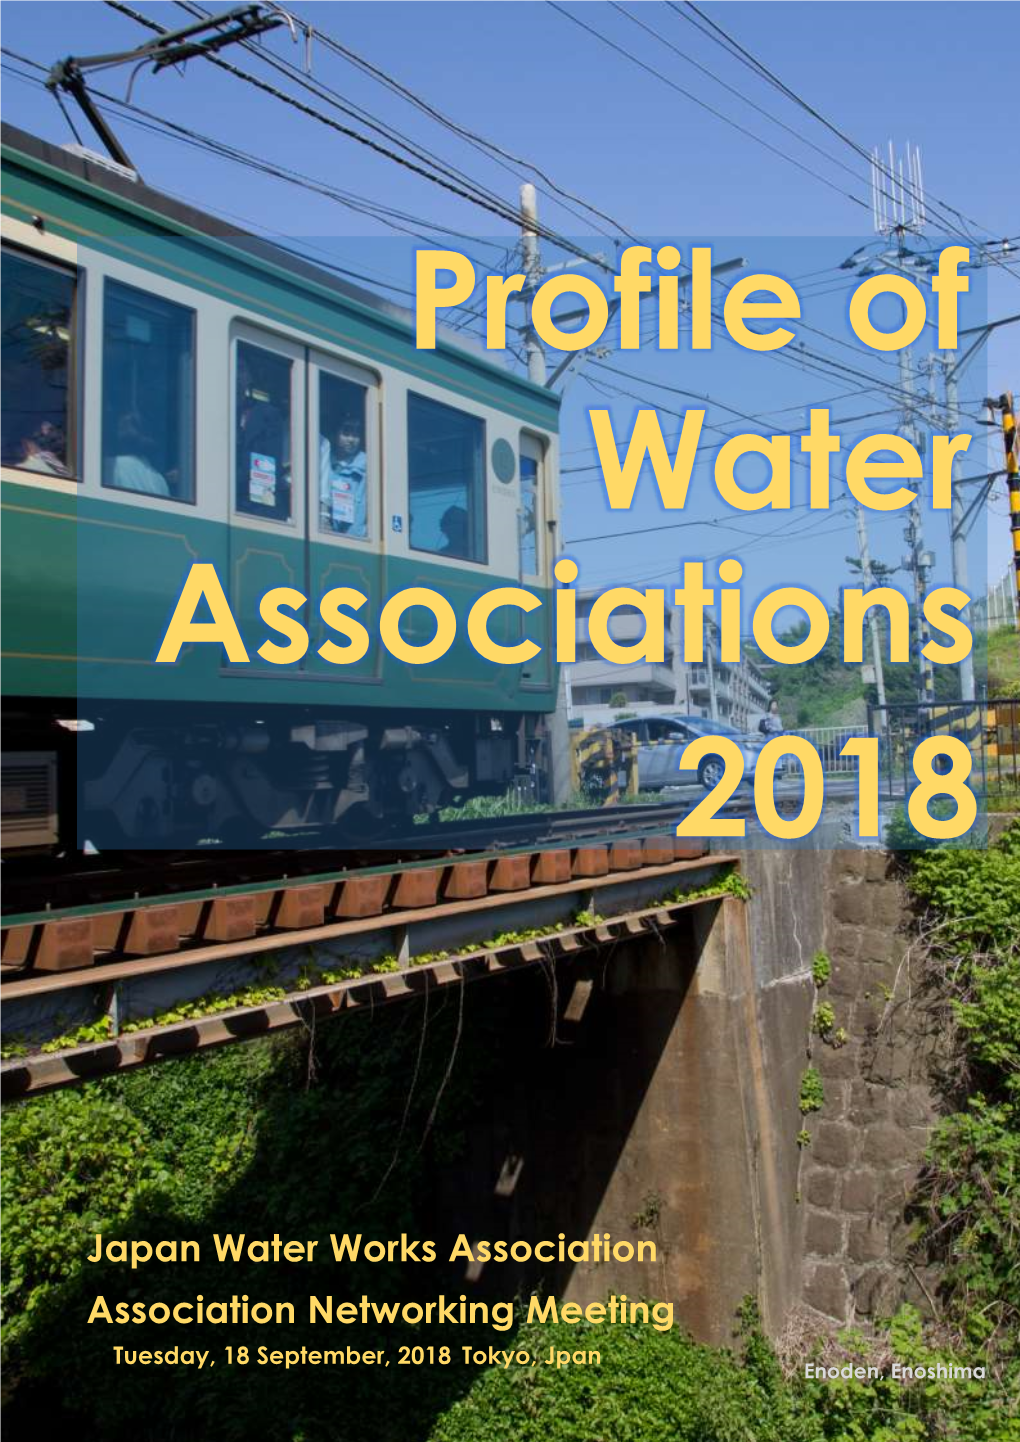 Japan Water Works Association Association Networking Meeting Tuesday, 18 September, 2018 Tokyo, Jpan 1 Enoden, Enoshima